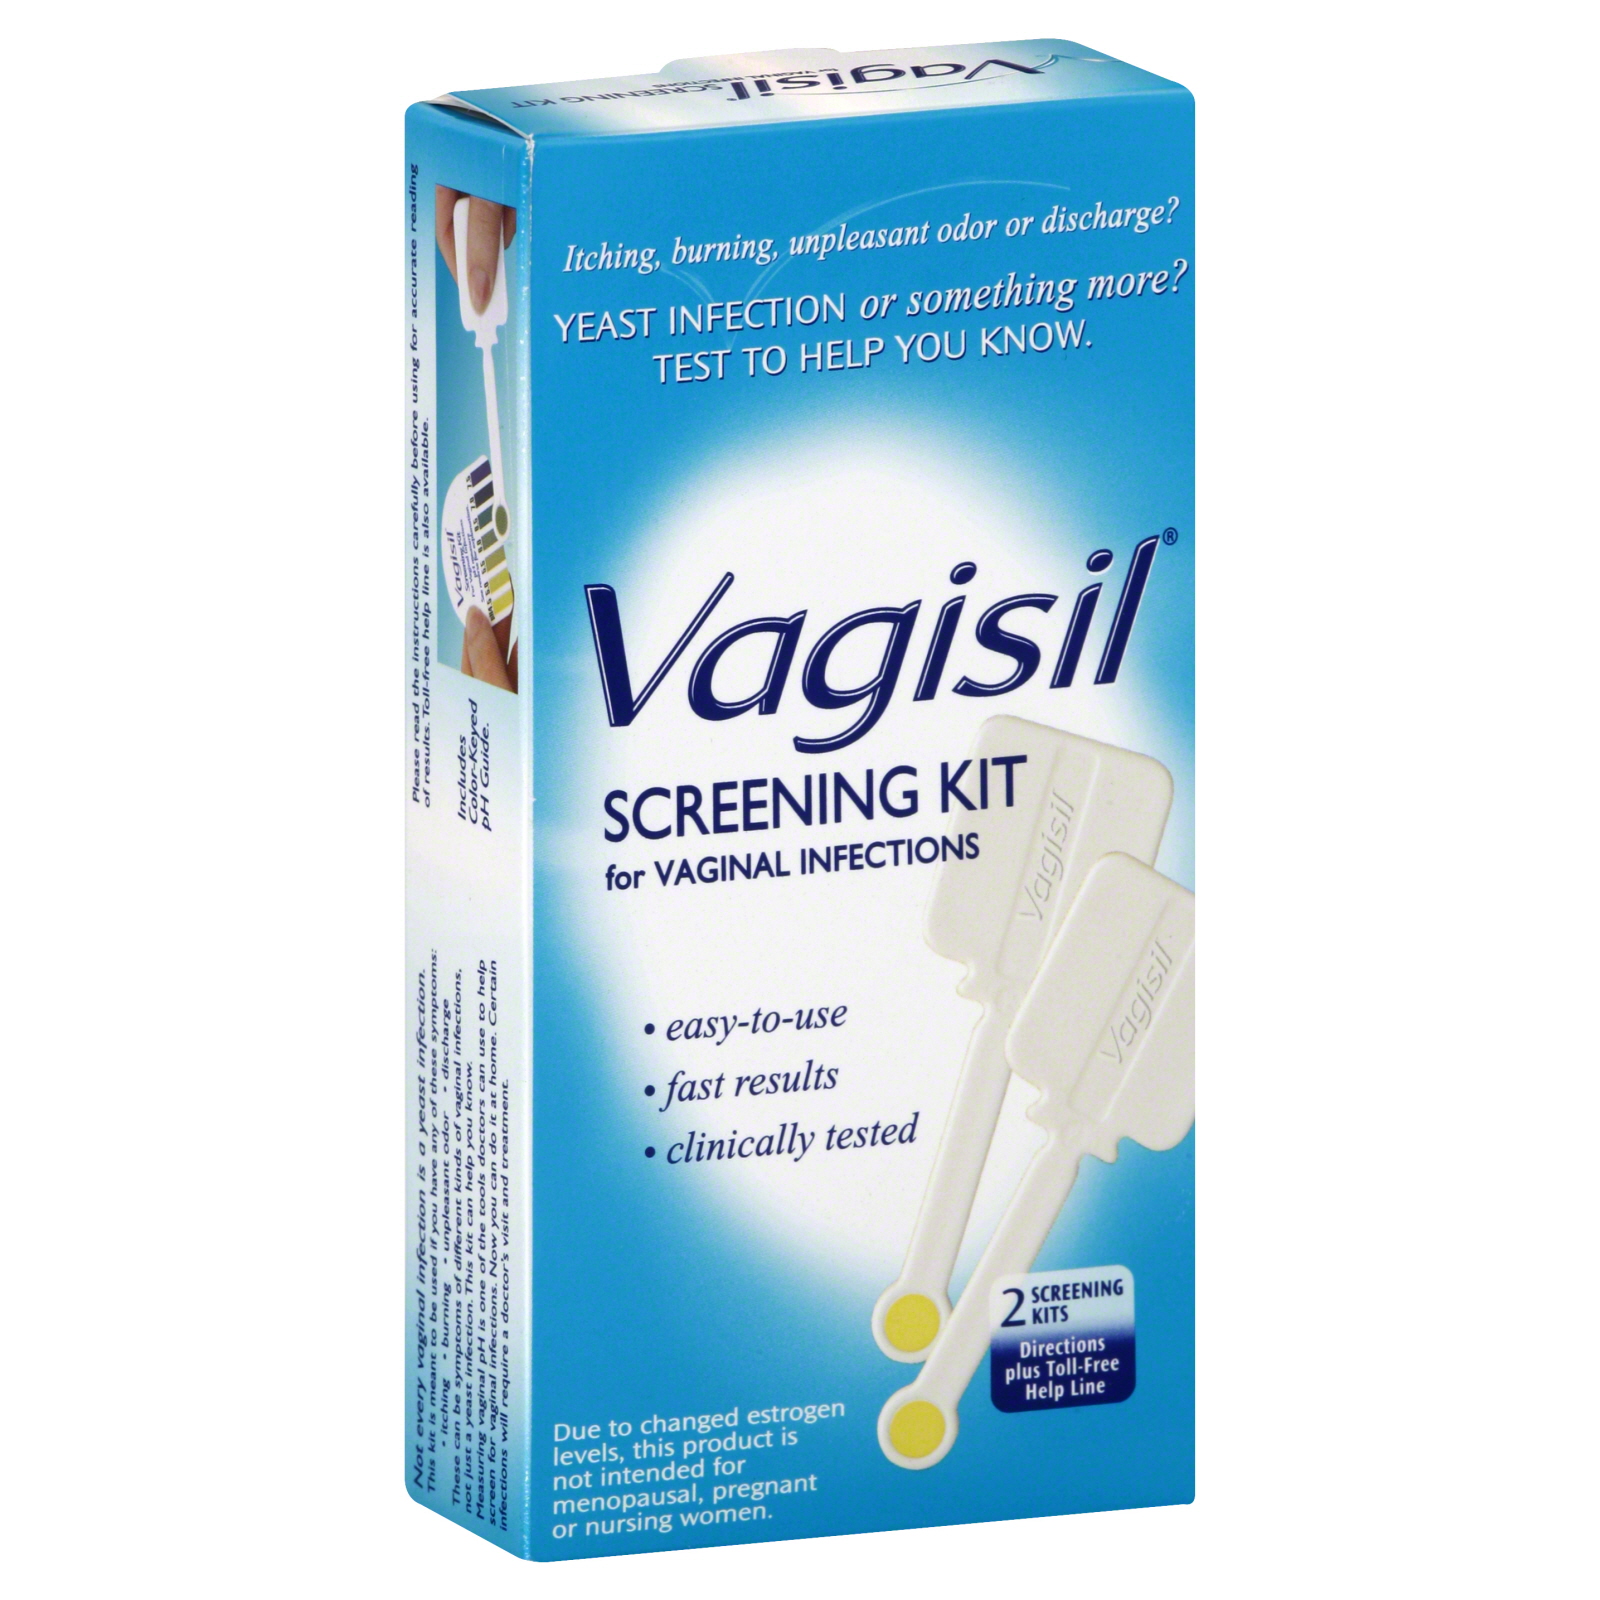 Vagisil Screening Kit, for Vaginal Infections, 2 kits